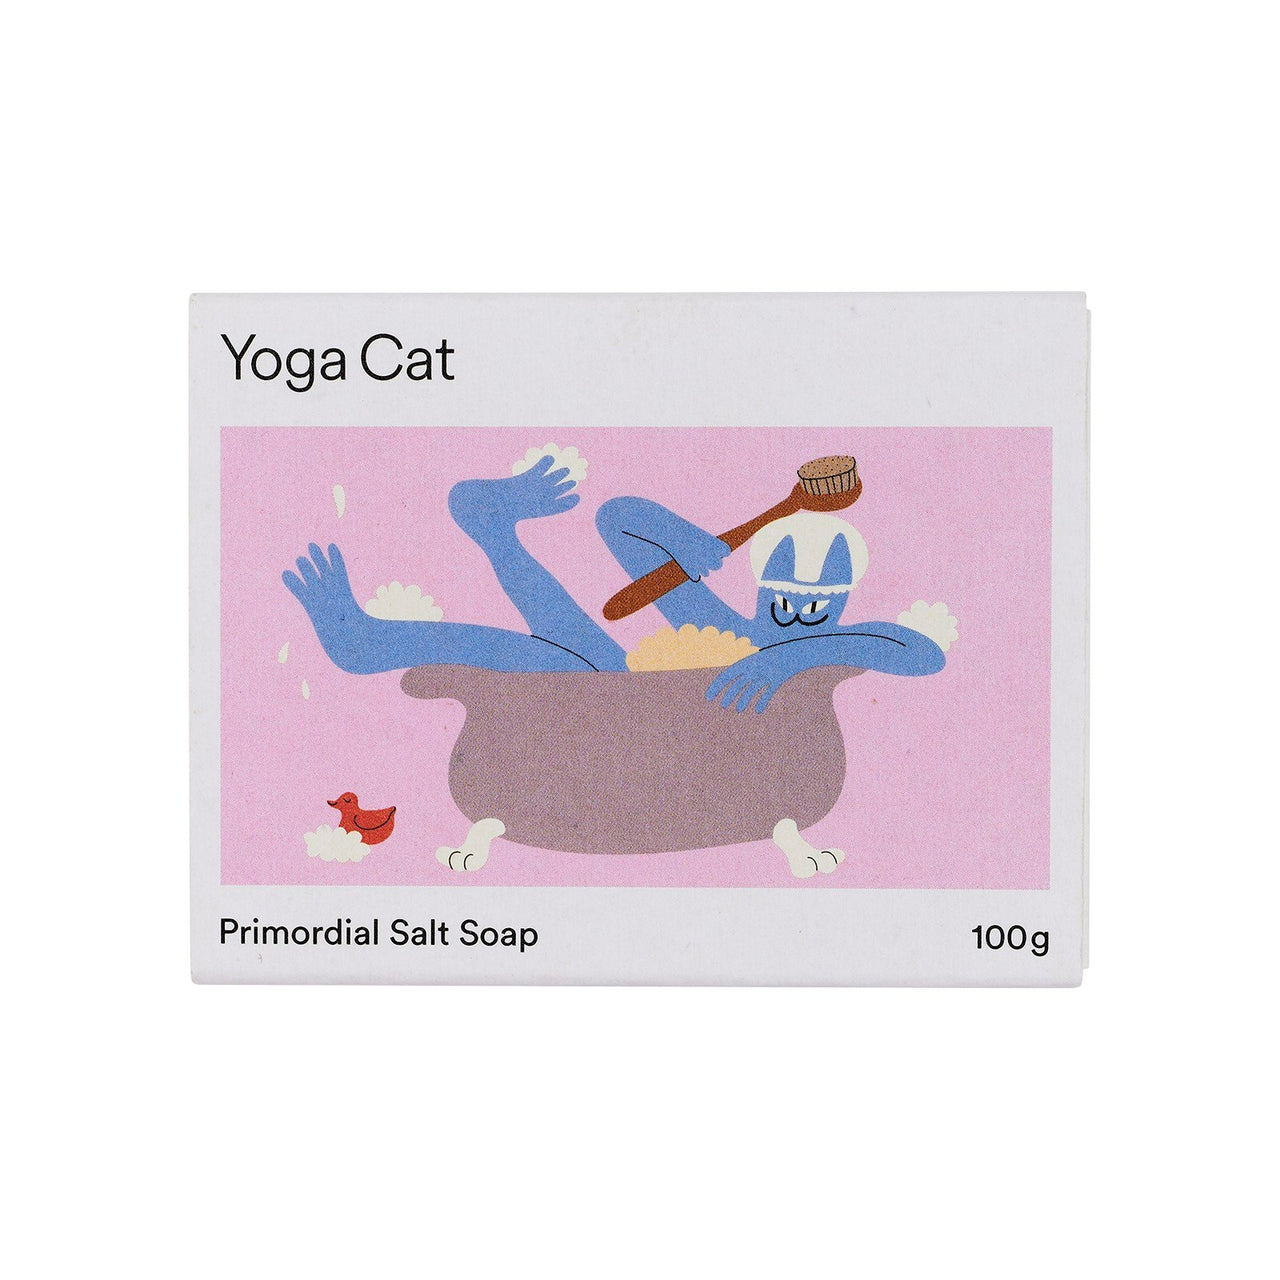 Primodal Salt Soap - yogacat.com